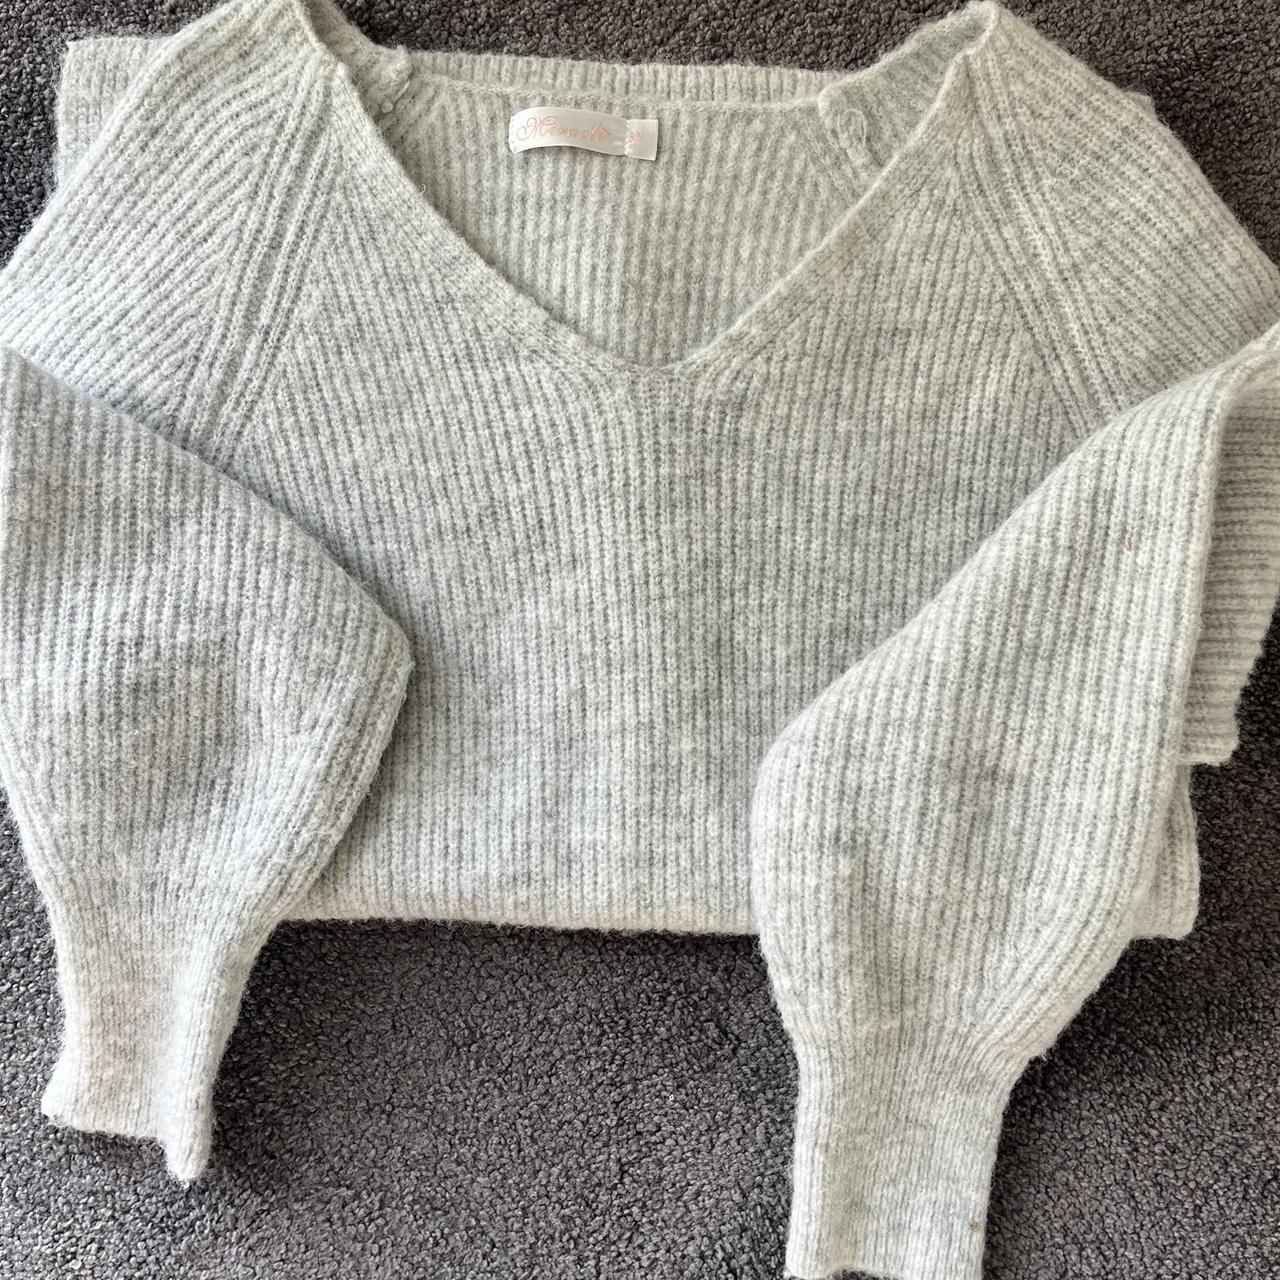 Charcoal knit jumper - size s/m - Depop